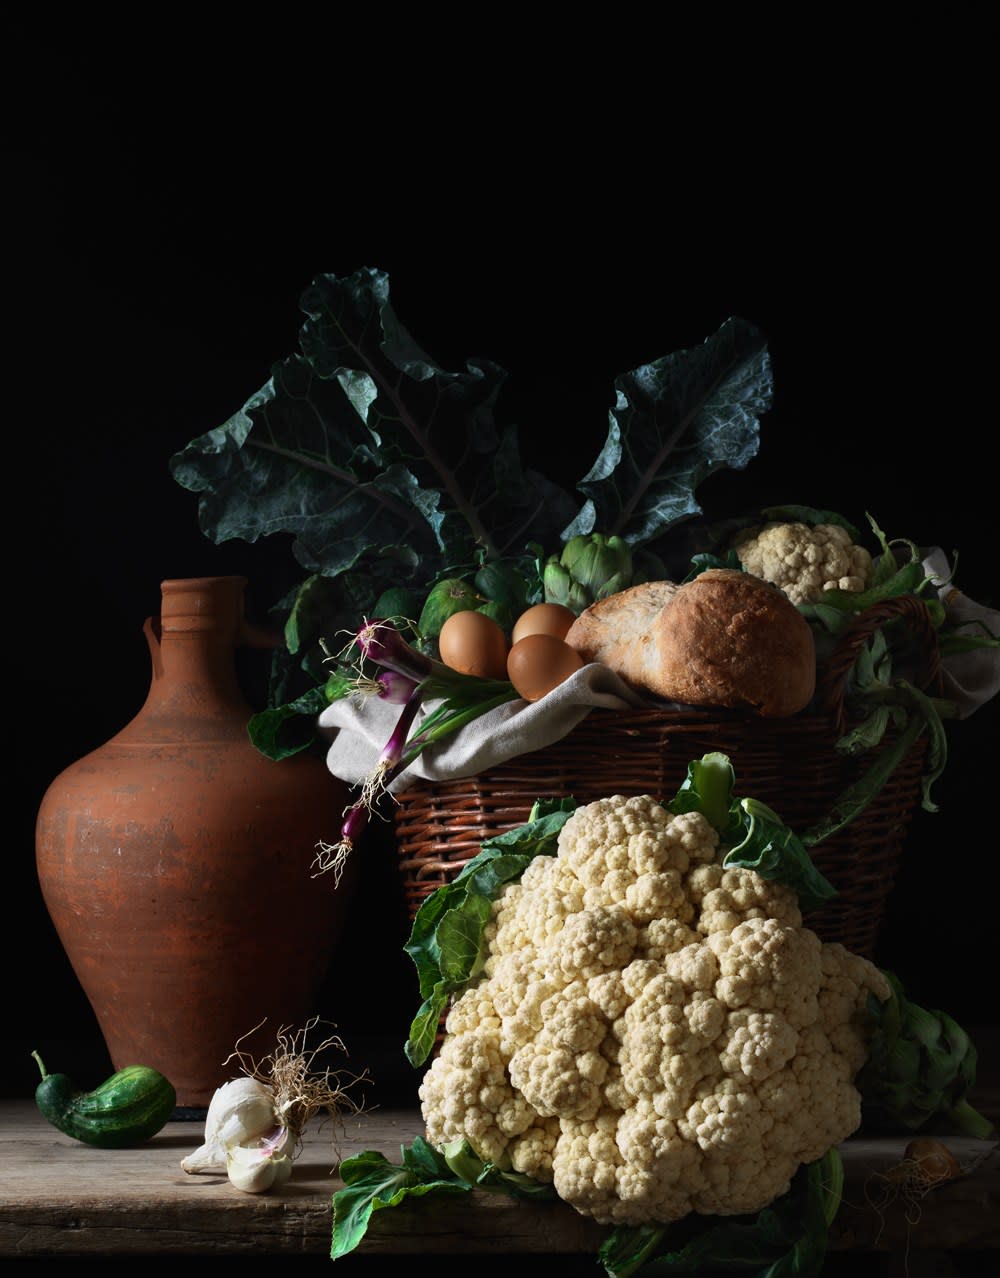 Paulette Tavormina, Still Life With Cauliflower and Bread, After L.M., 2014